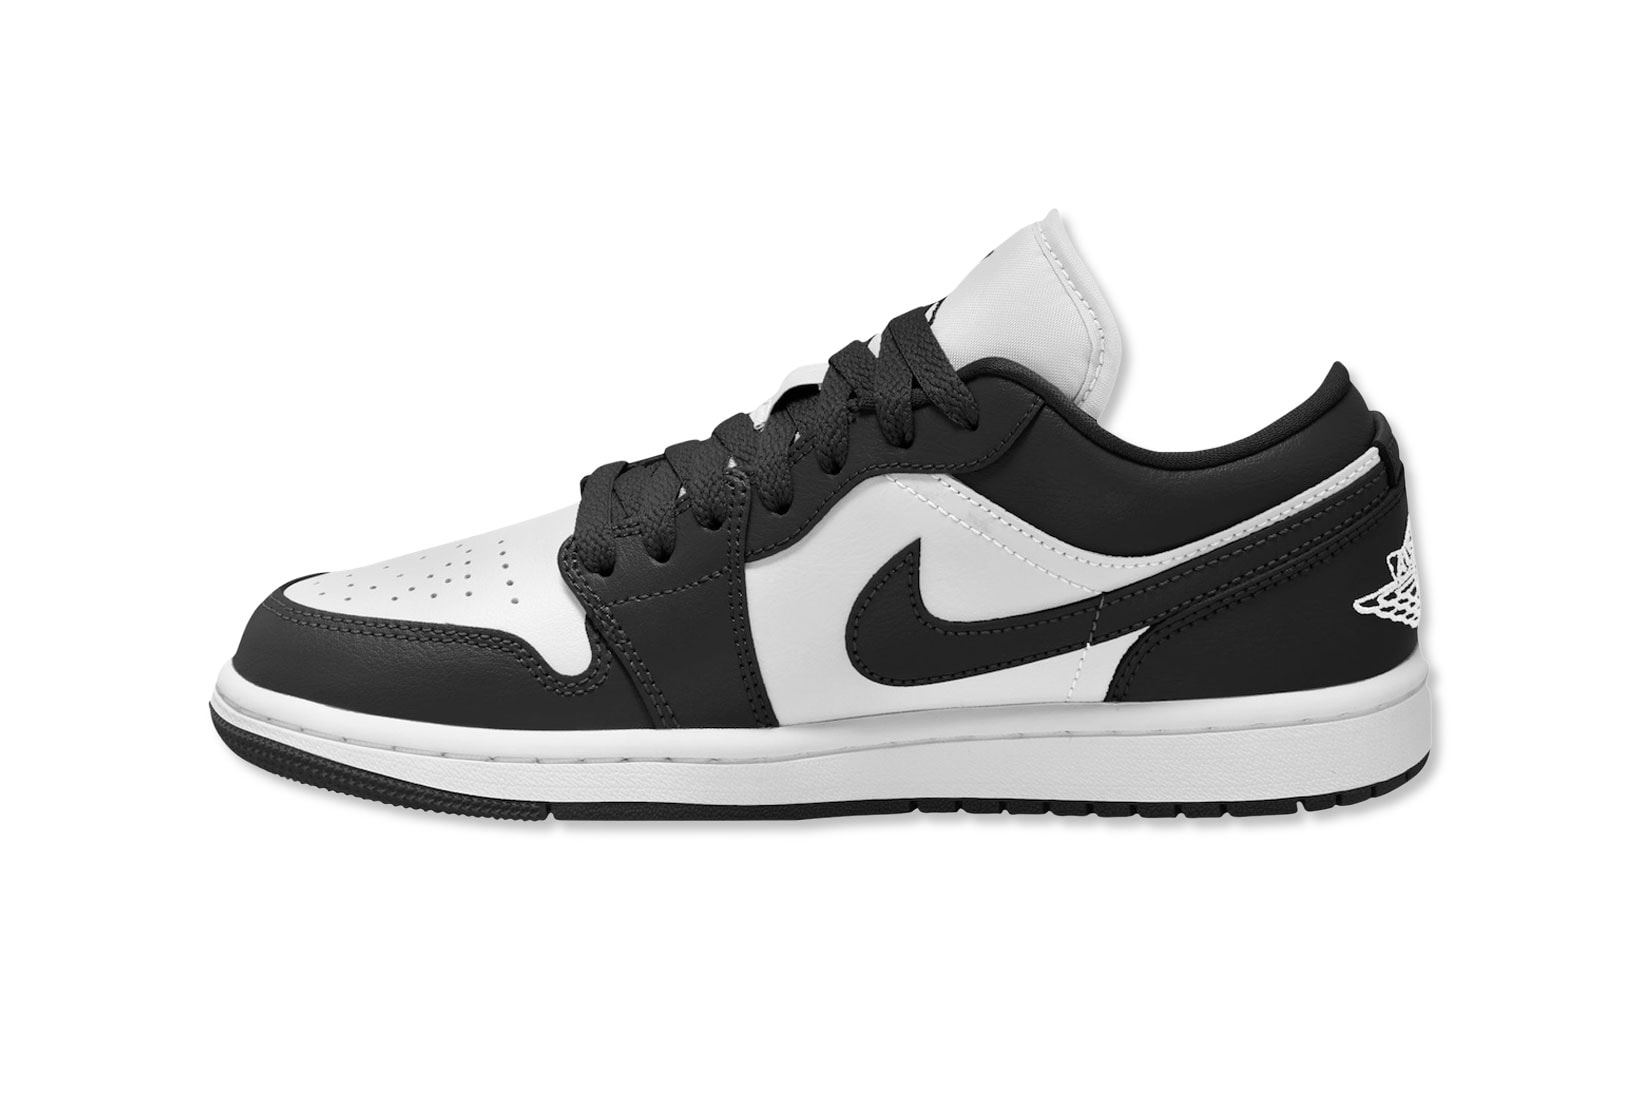 Nike Air Jordan 1 Low "Panda" Black White Release Info